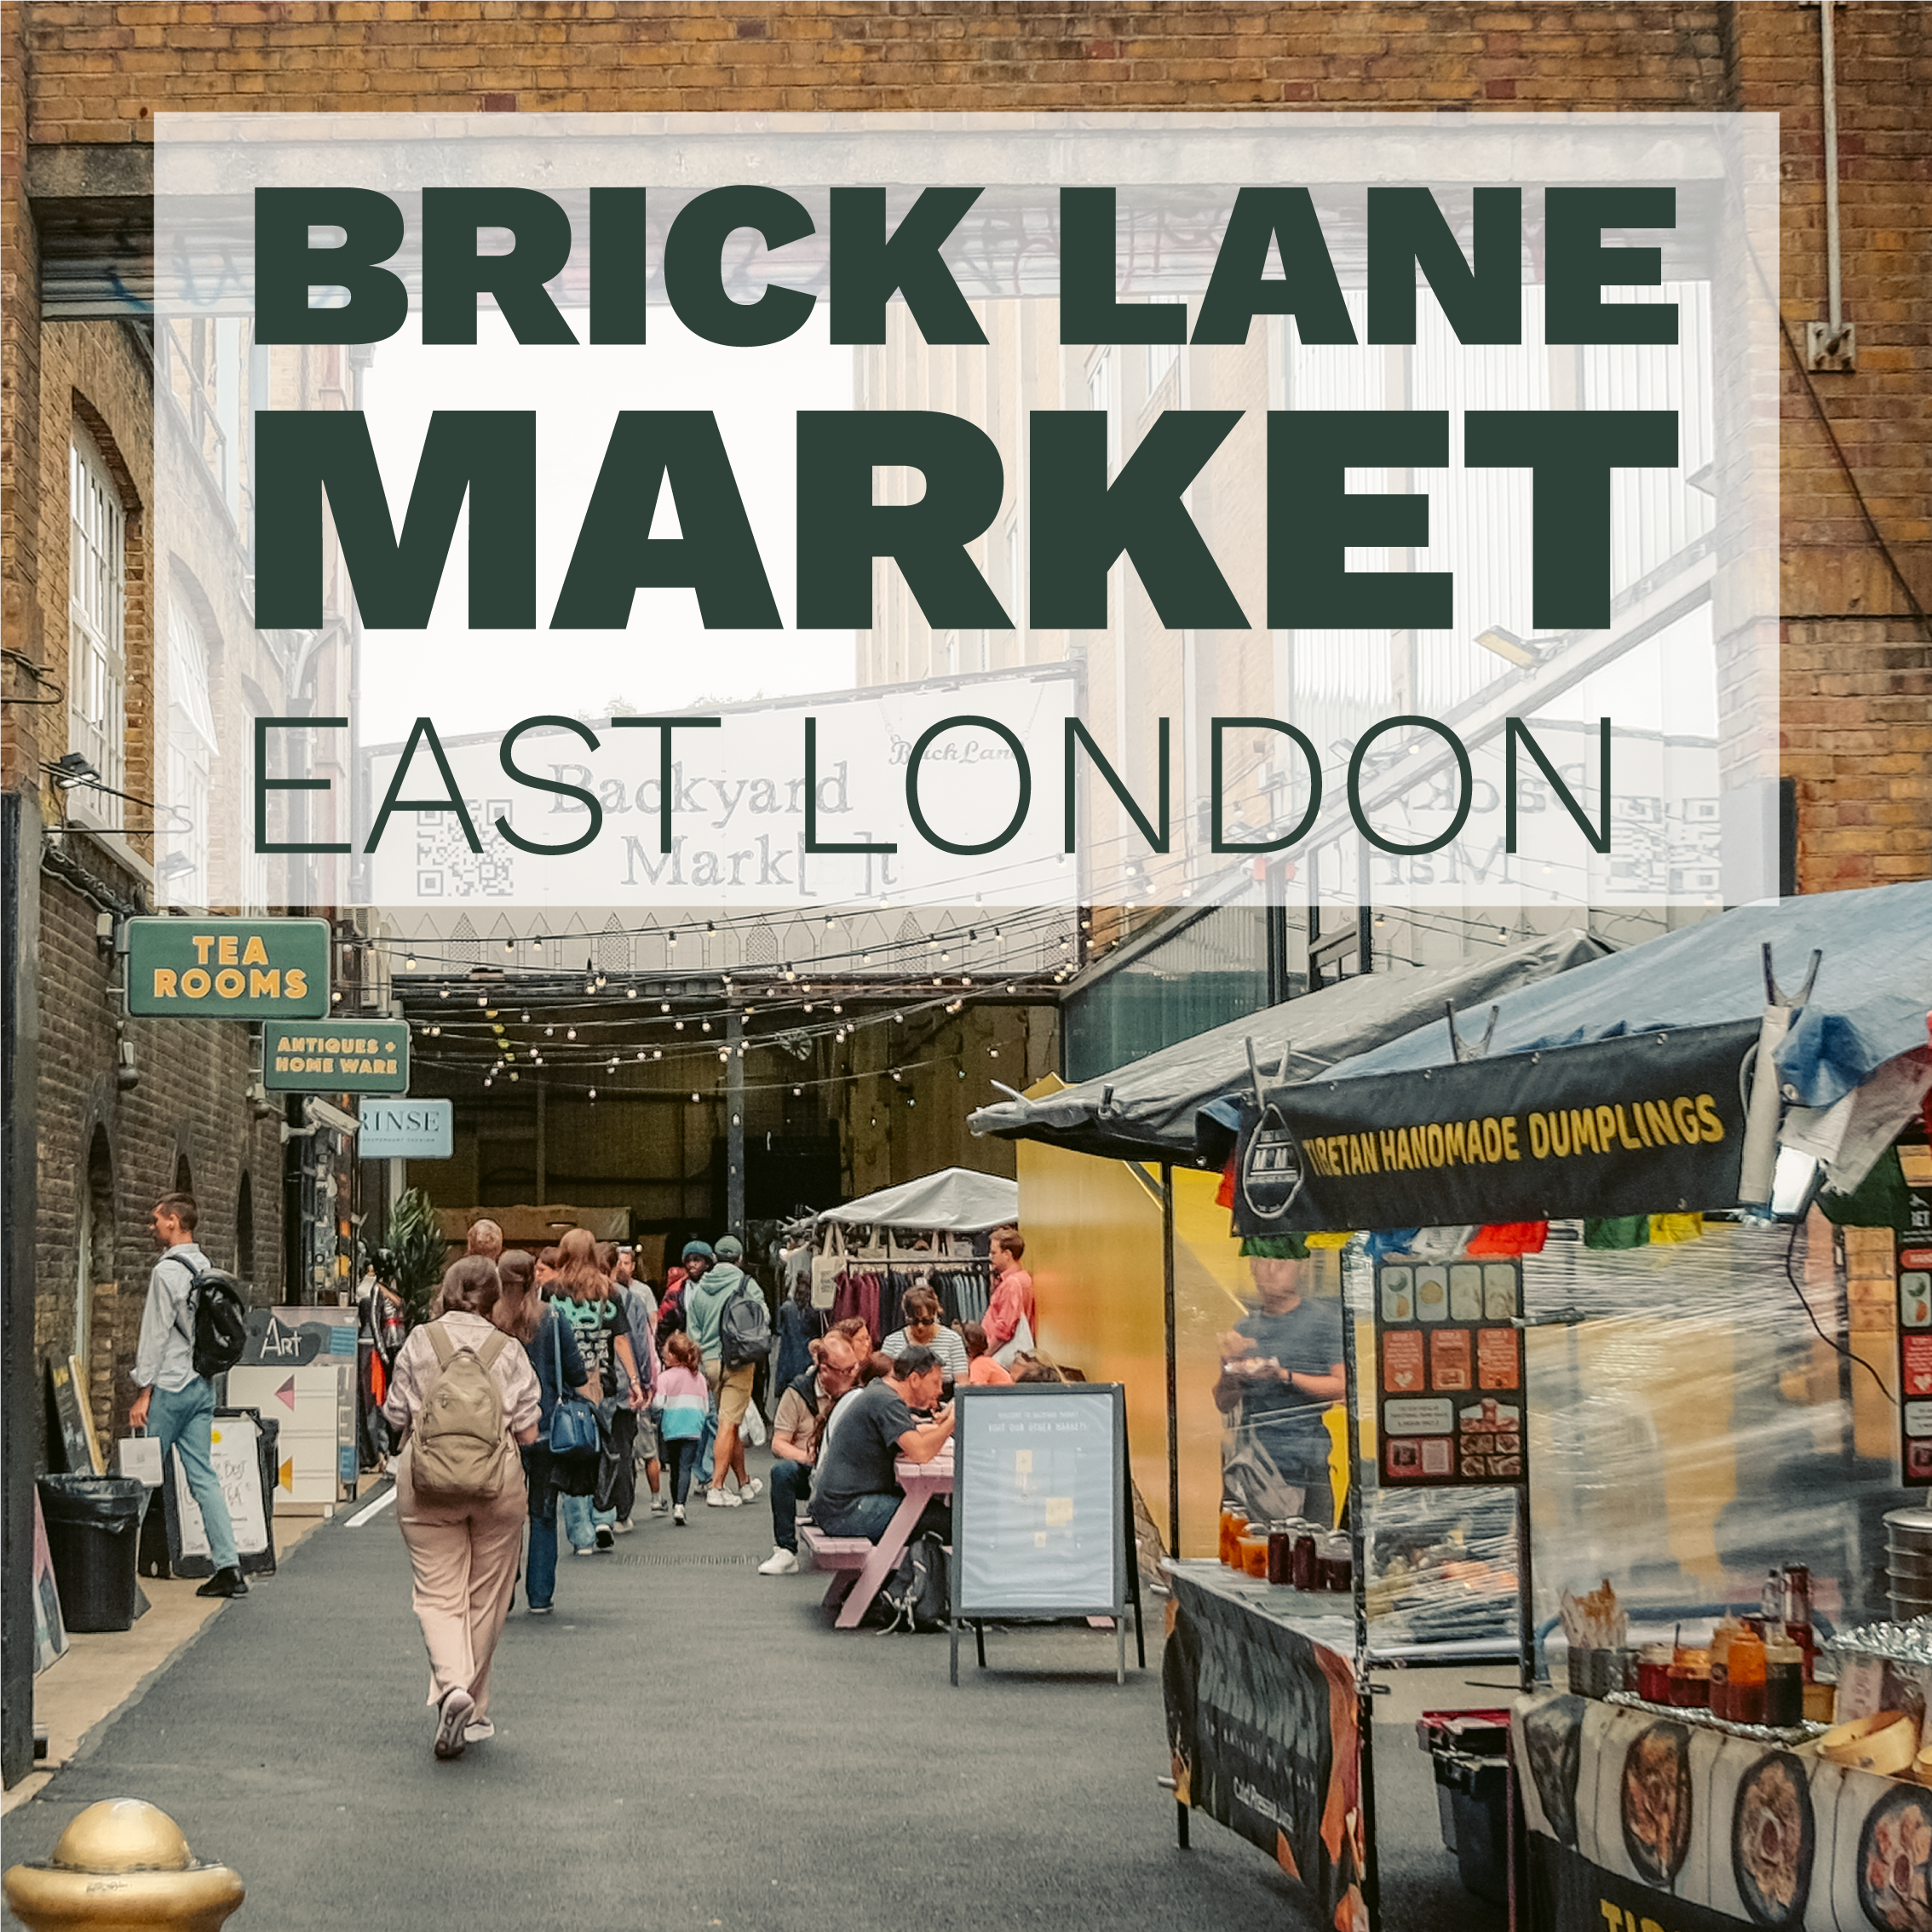 Marvelous Markets pt 5: Brick Lane Market, East London